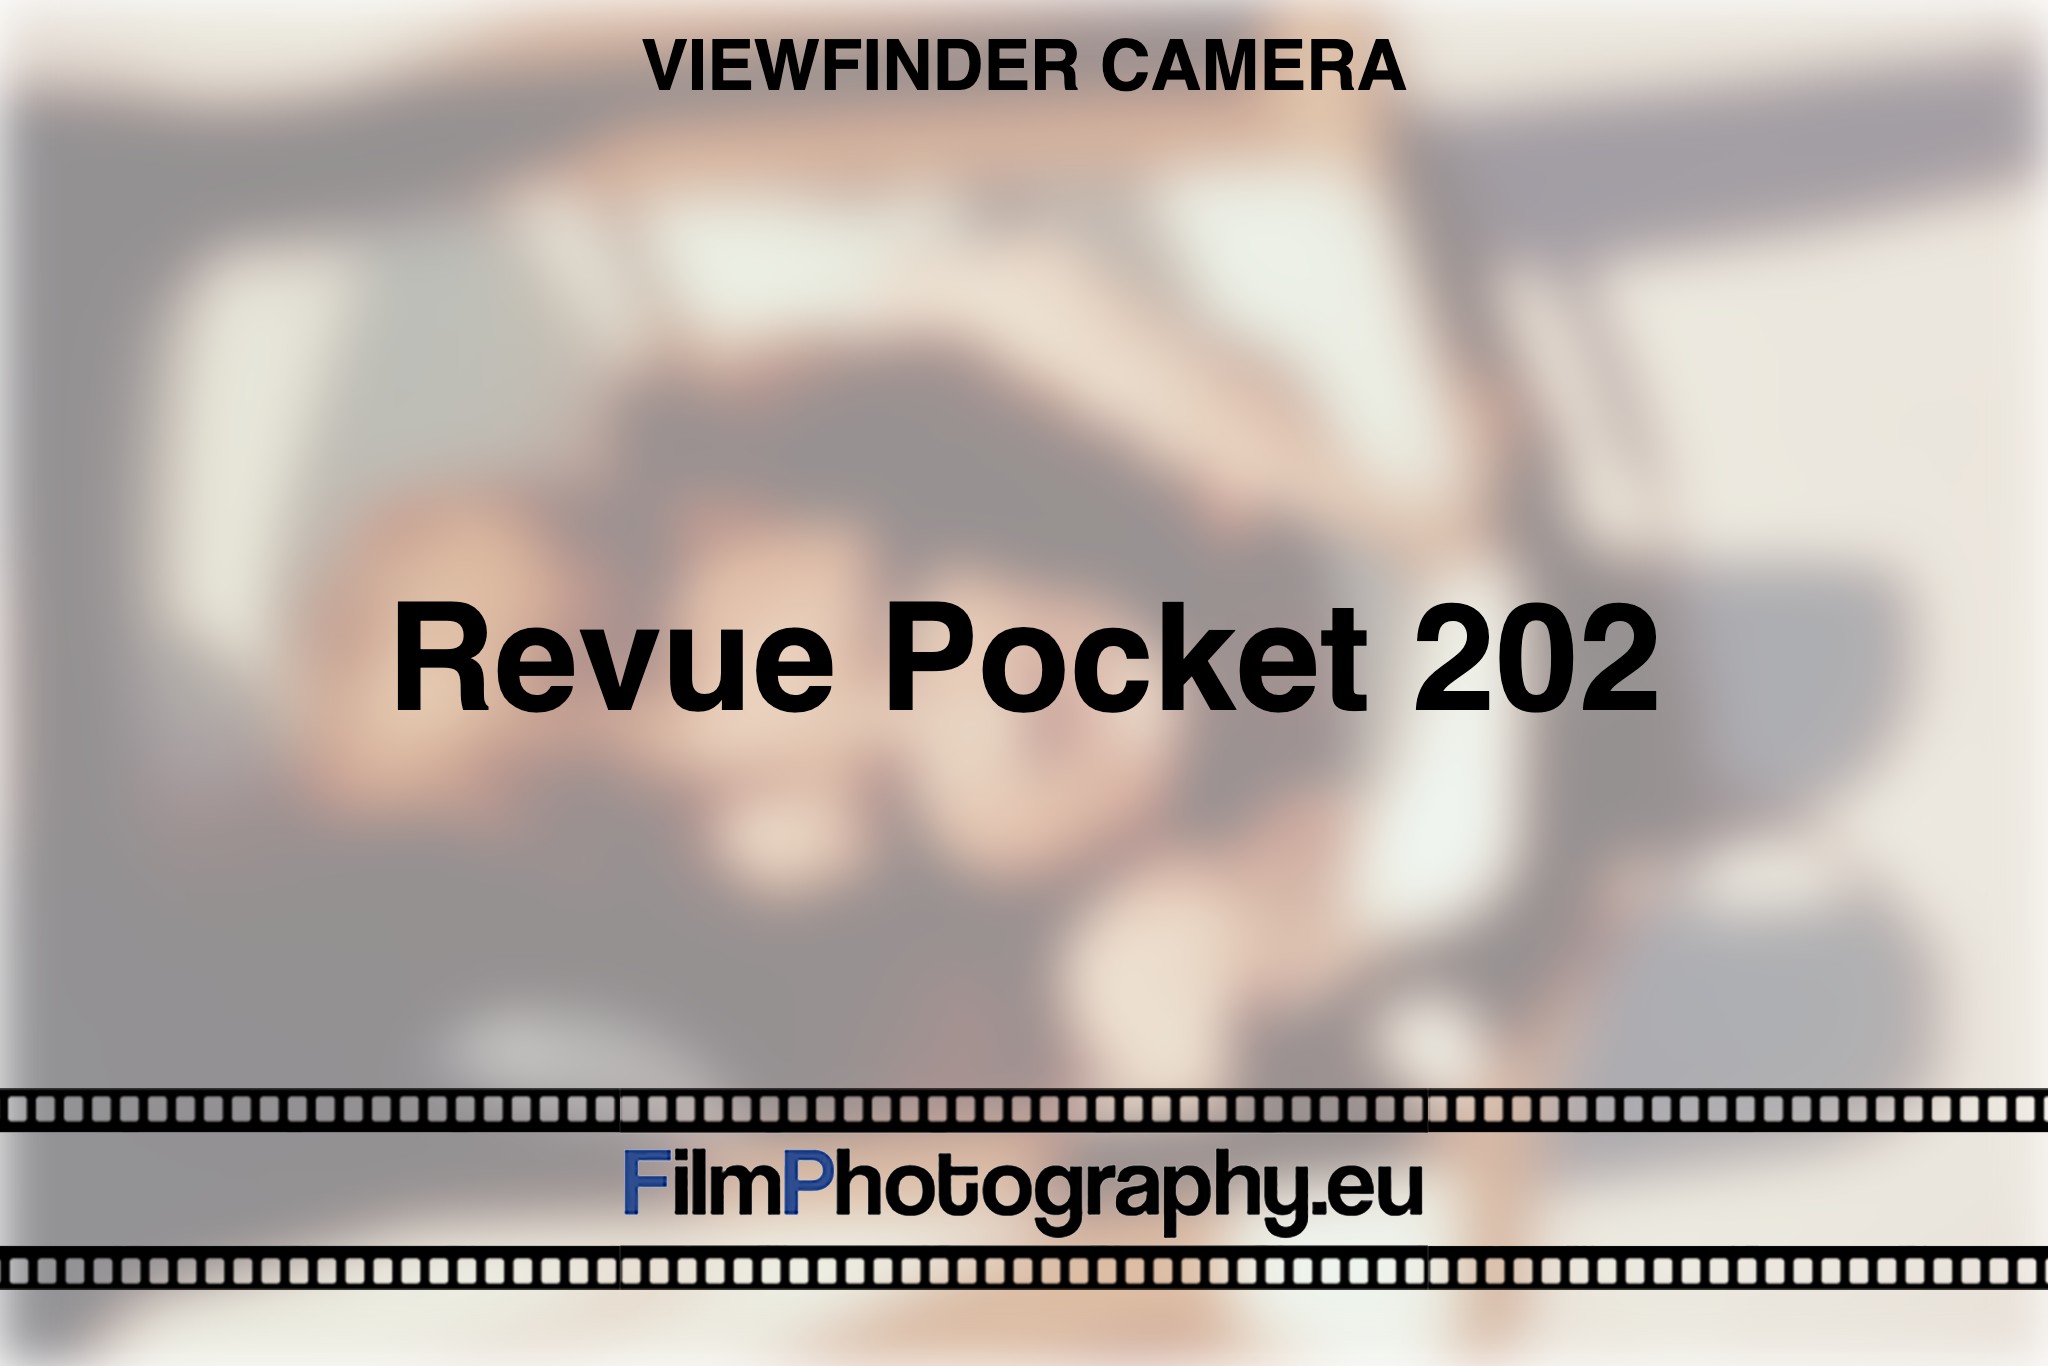 revue-pocket-202-viewfinder-camera-bnv